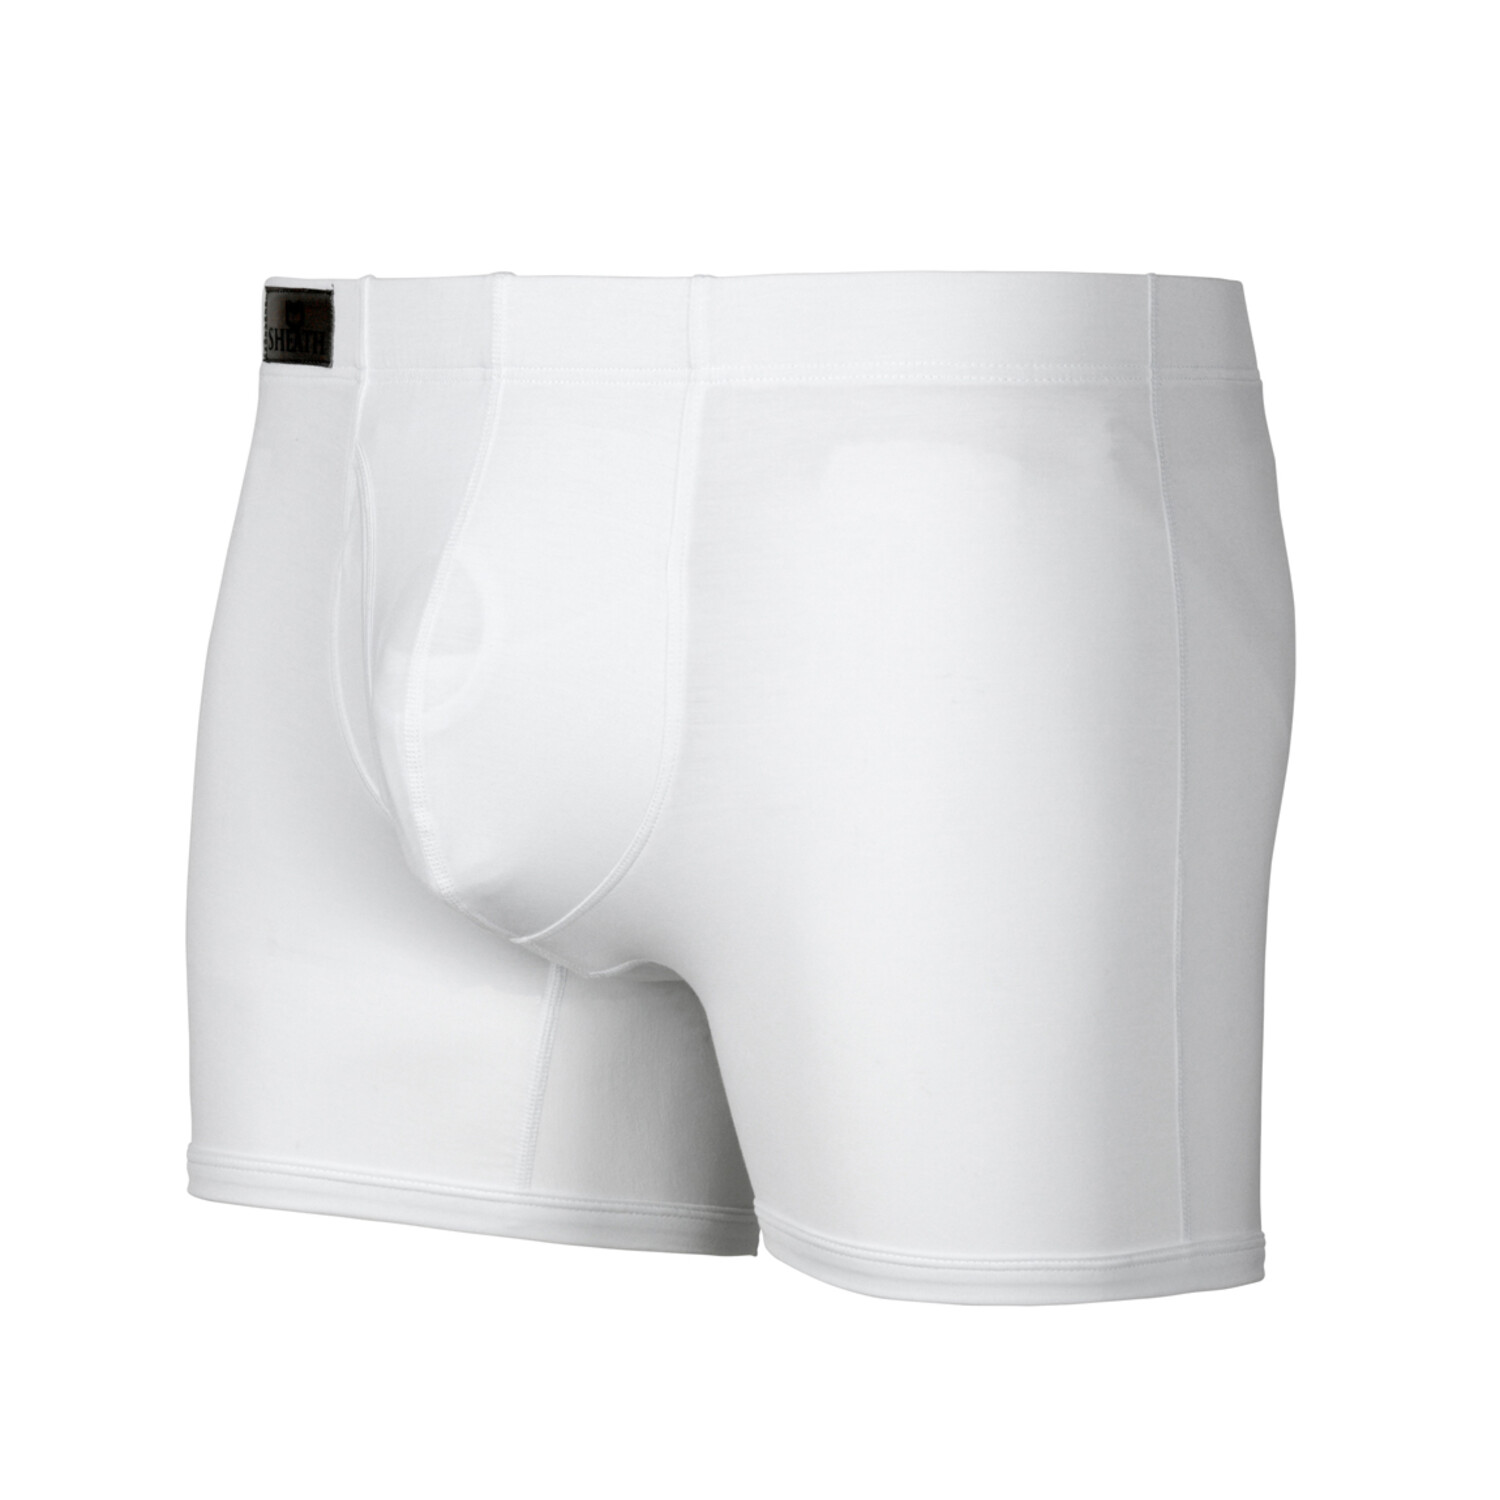 SHEATH 3.21 Men's Dual Pouch Boxer Brief // White (Large) - Sheath Underwear  - Touch of Modern